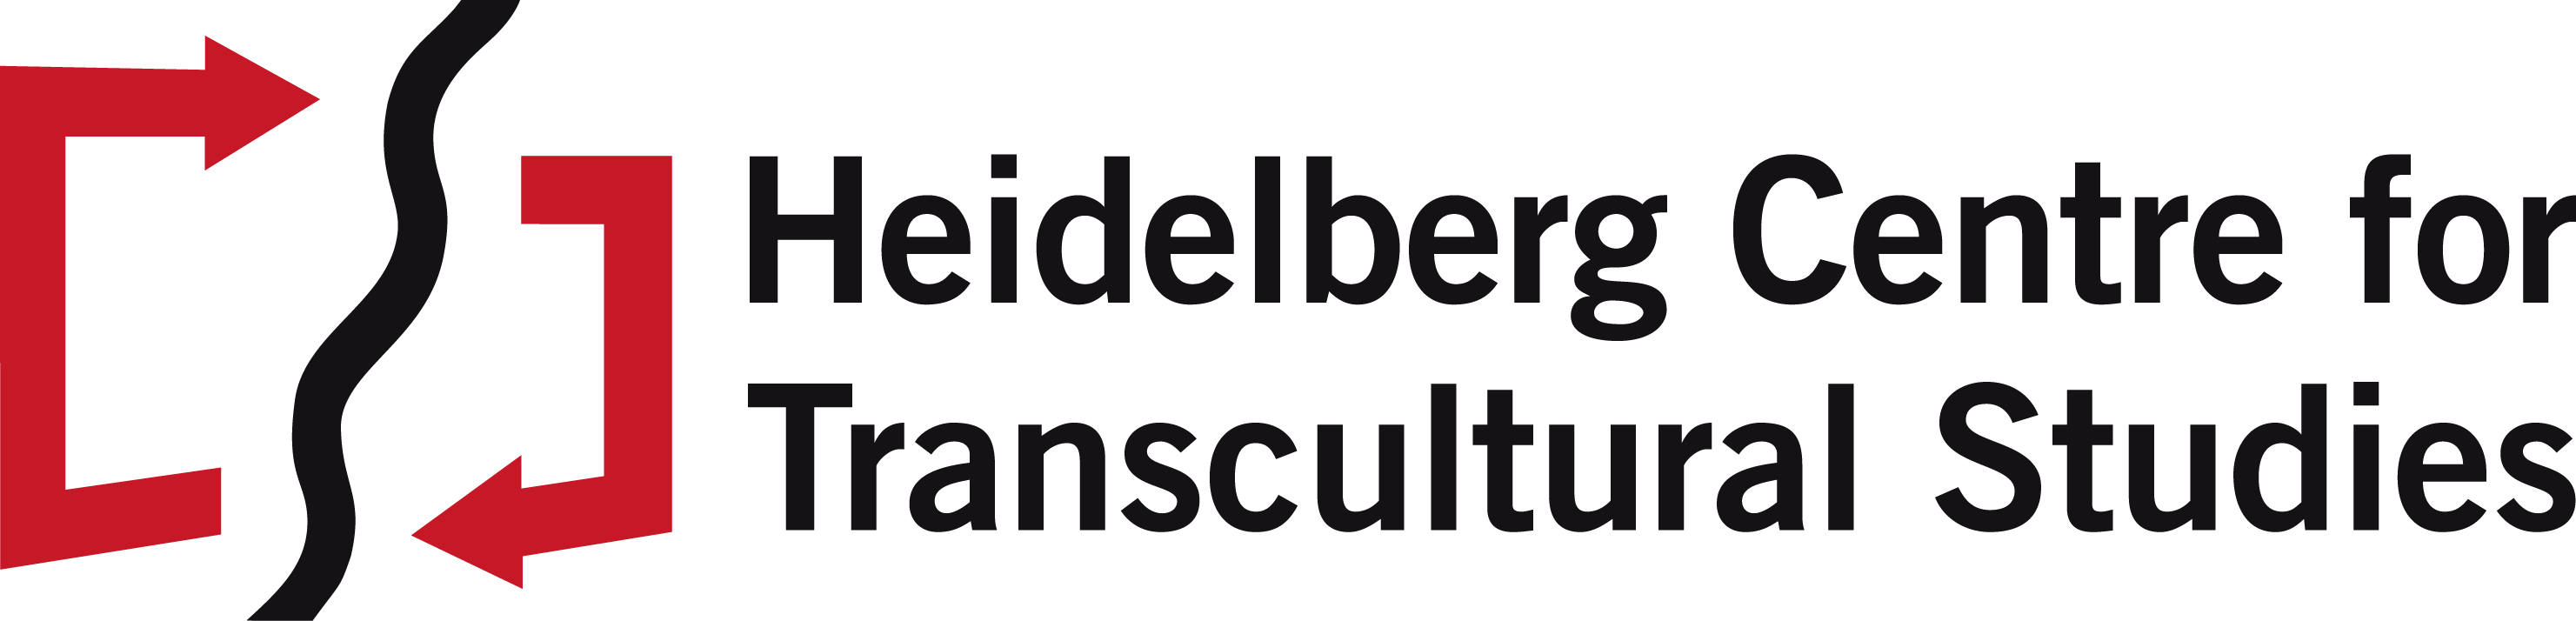 Heidelberg Centre for Transcultural Studies (HCTS) logo